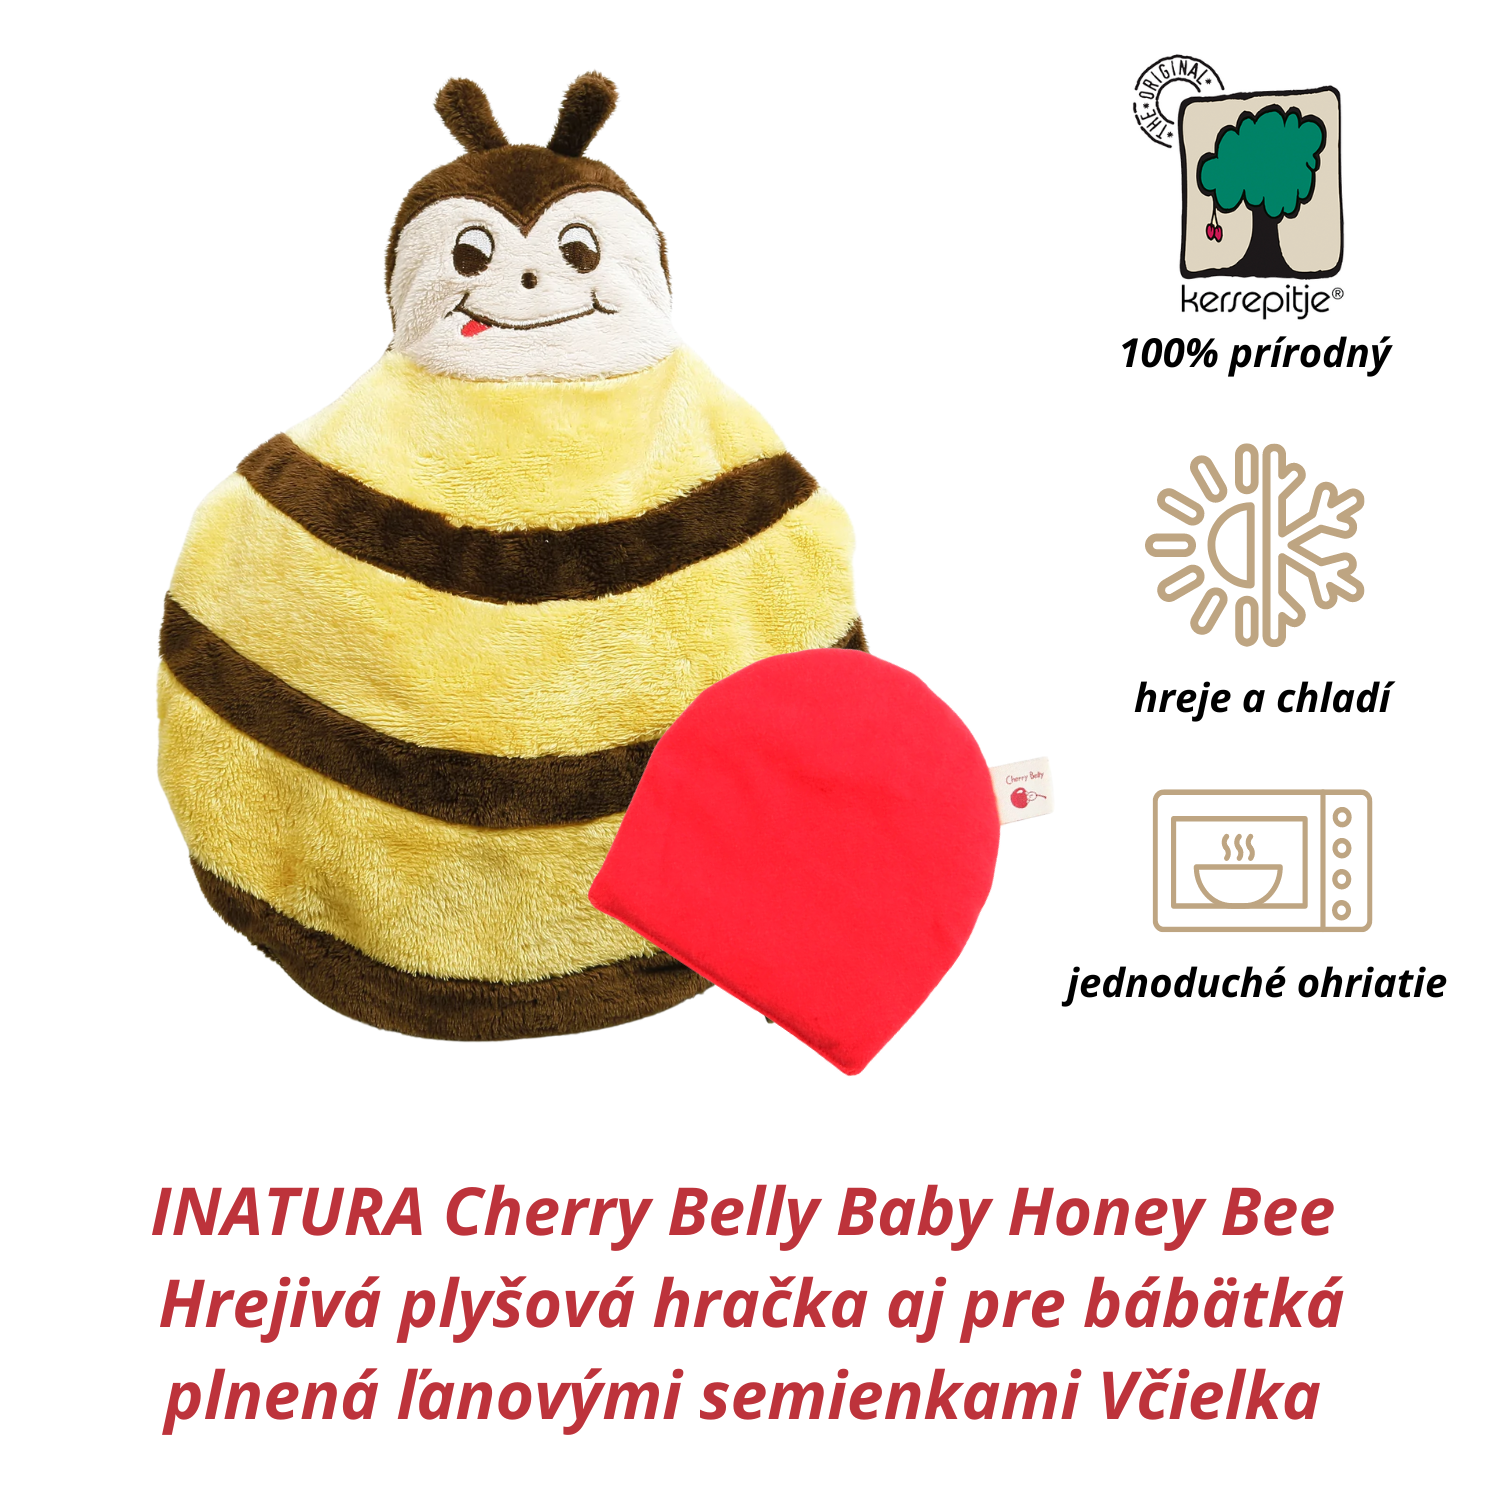 INATURA Cherry Belly Baby Honey Bee